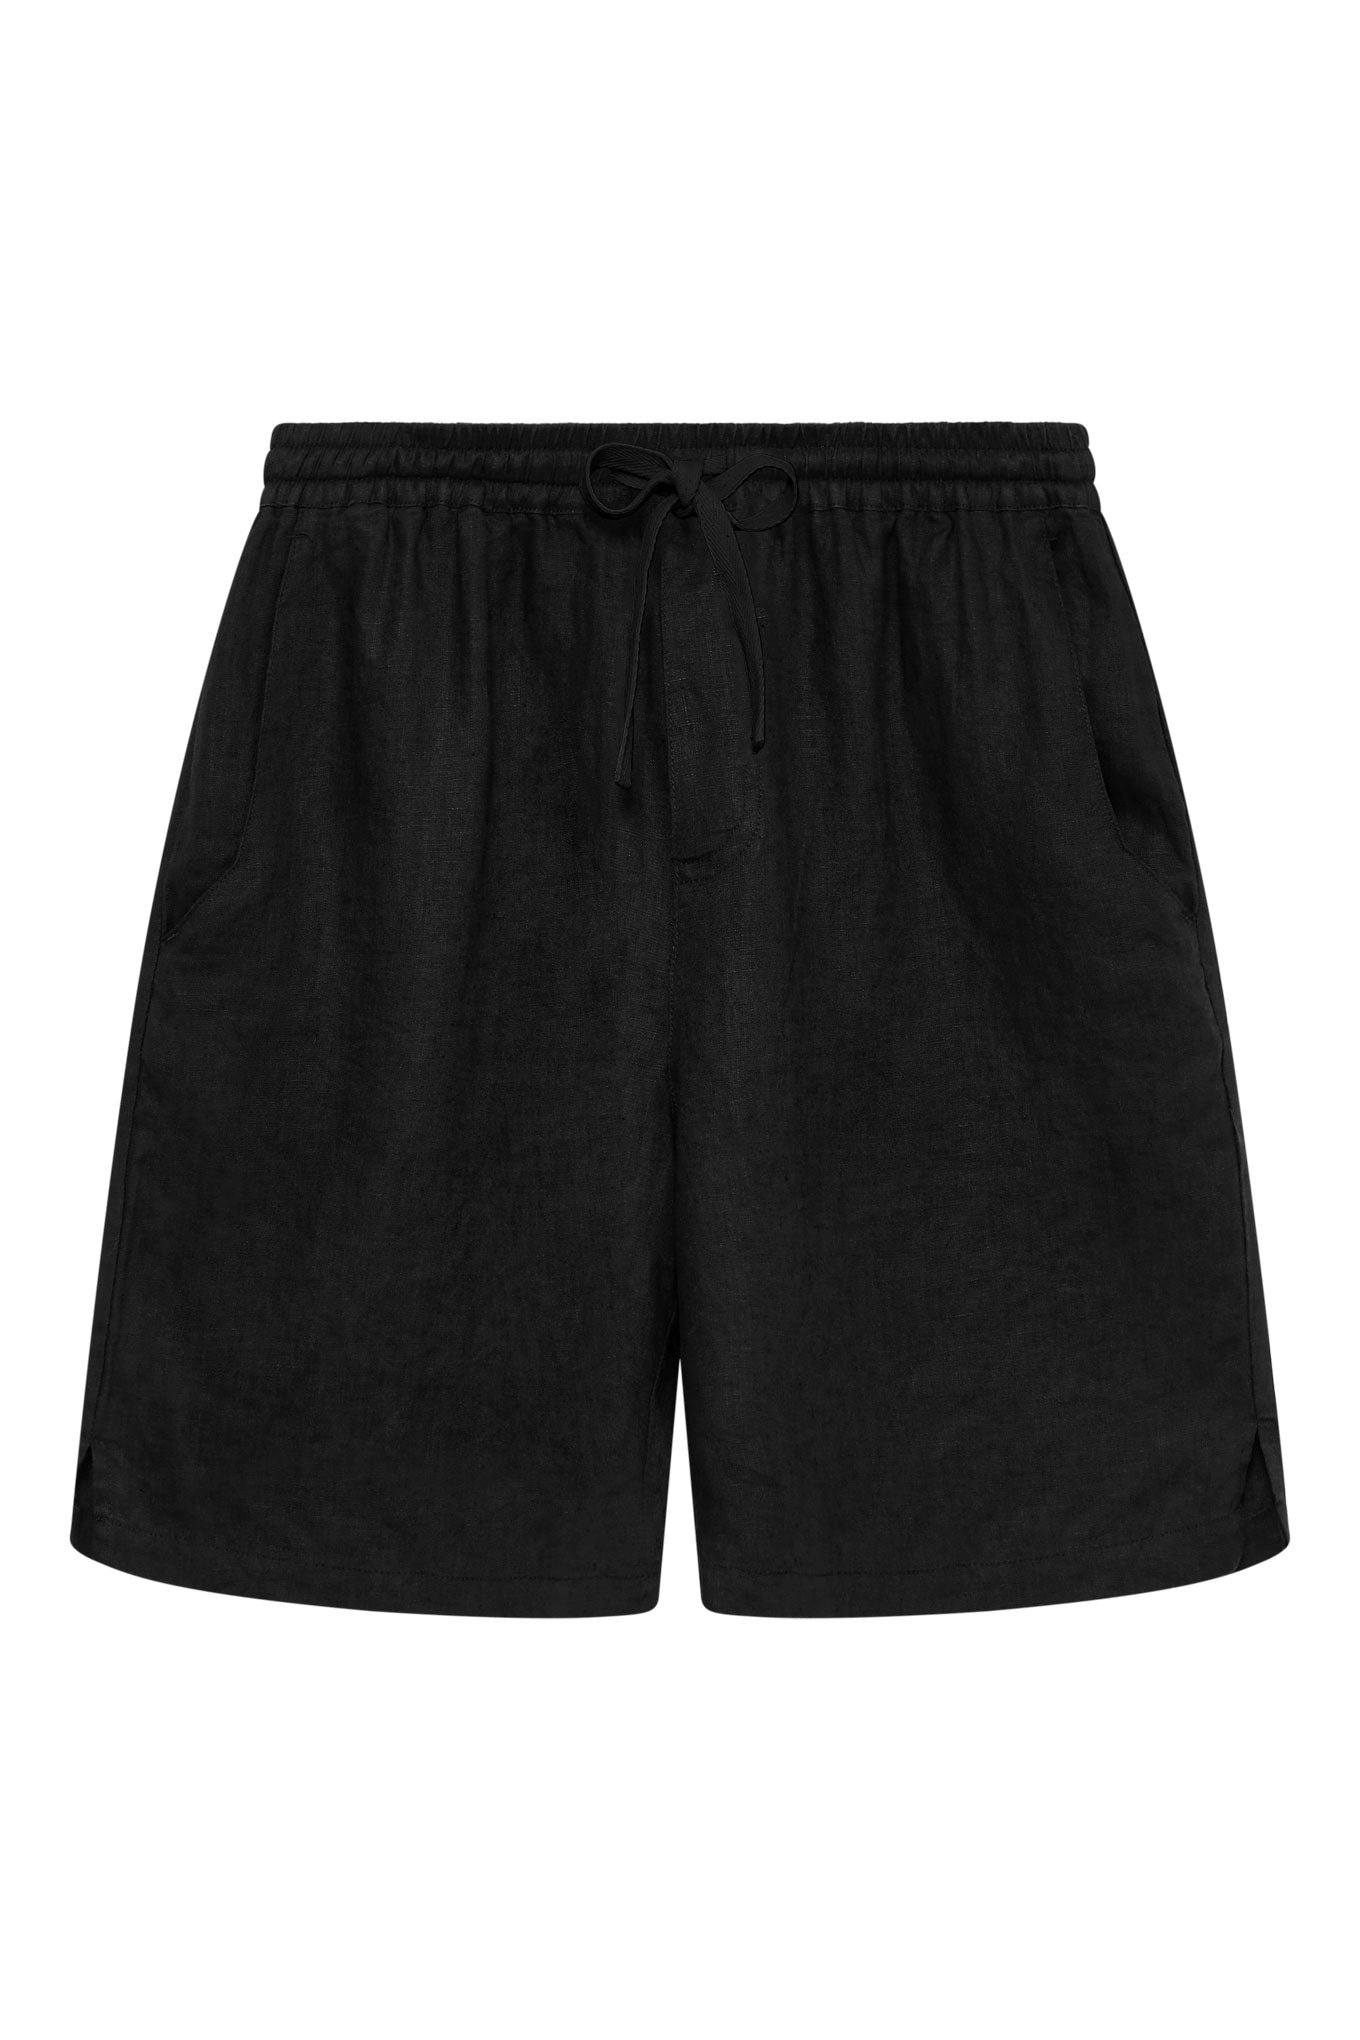 Komodo Men's Jerry - Linen Shorts Black